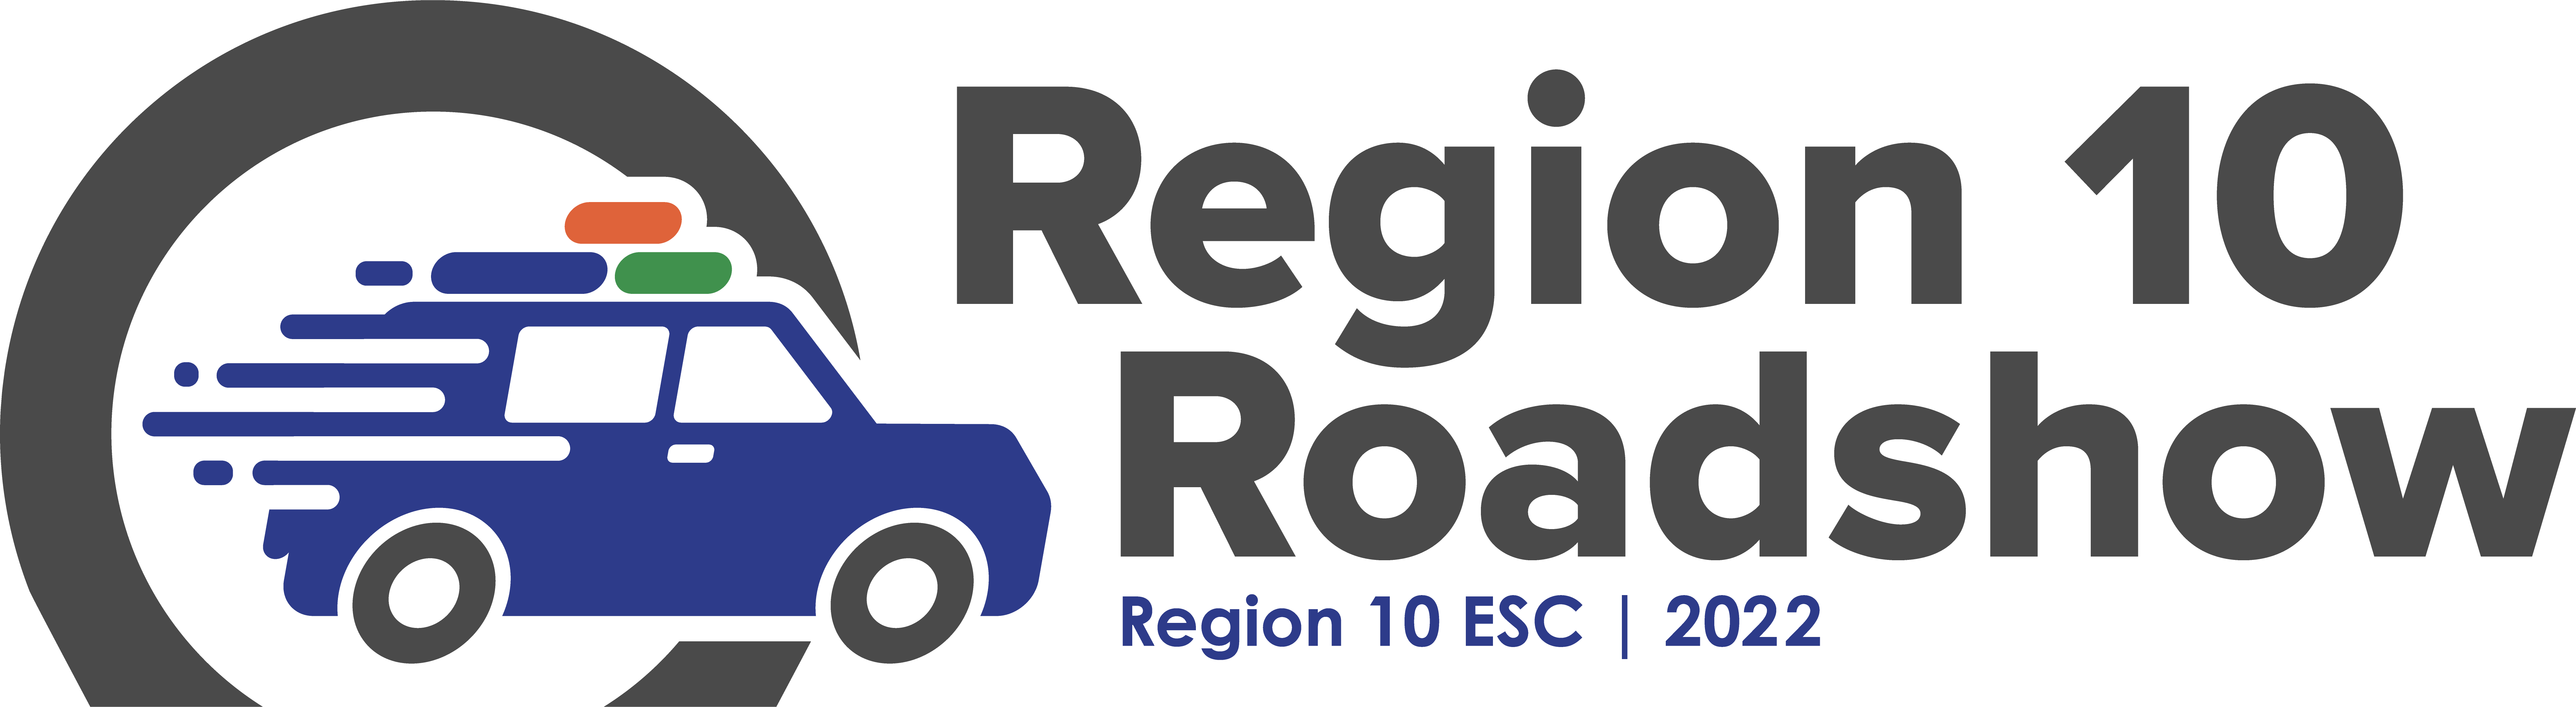 Region 10 Summer Roadshow 2022